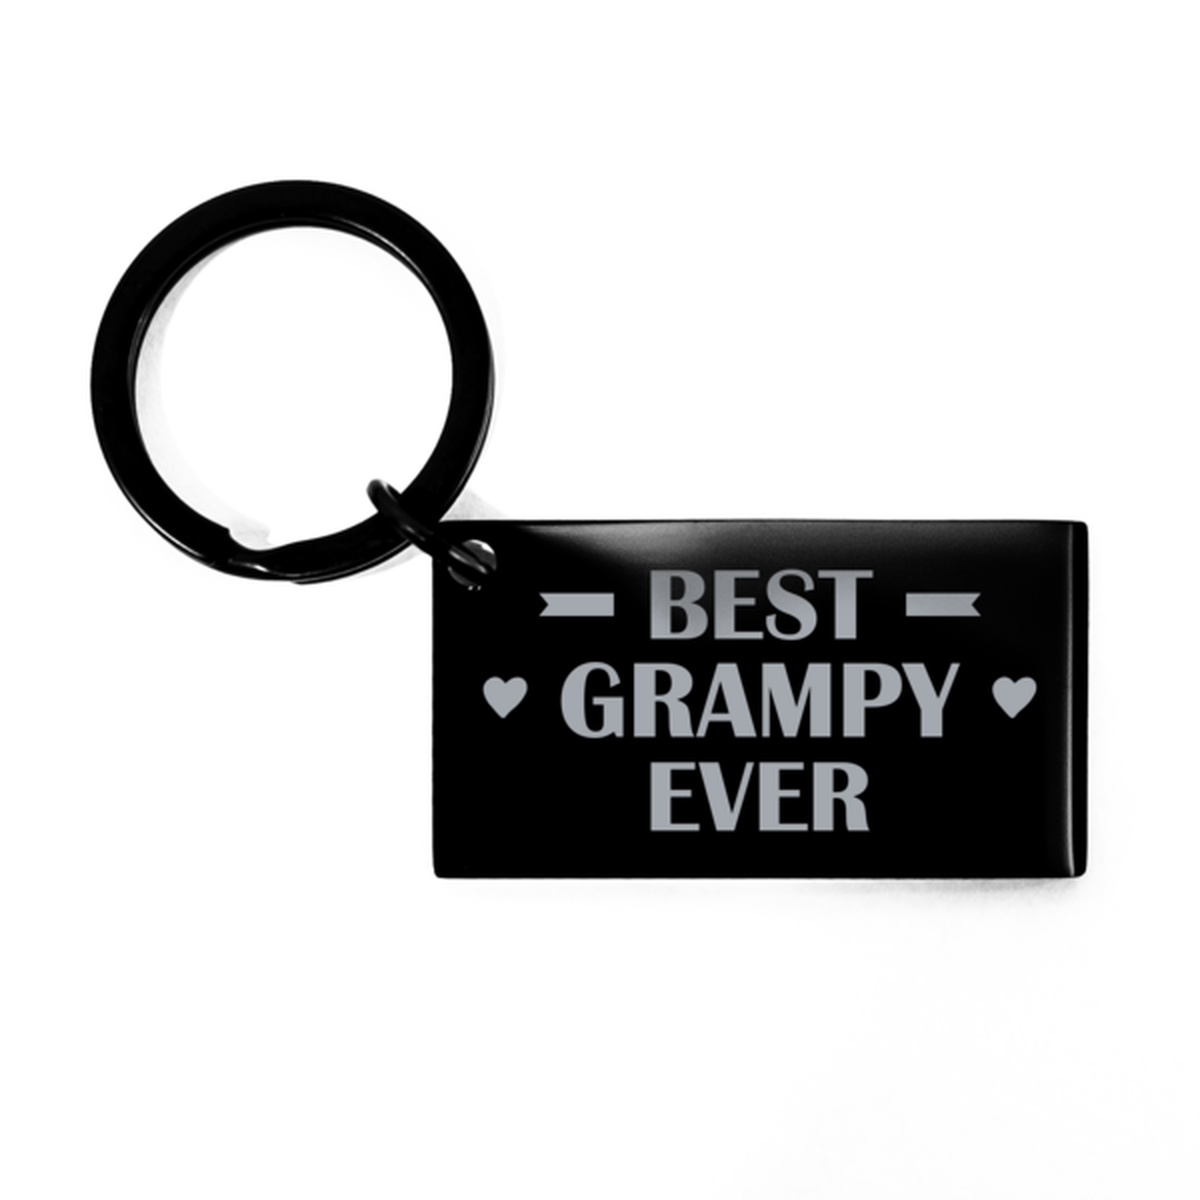 Best Grampy Ever Grampy Gifts, Funny Black Keychain For Grampy, Birthday Engraved Keyring Presents For Men